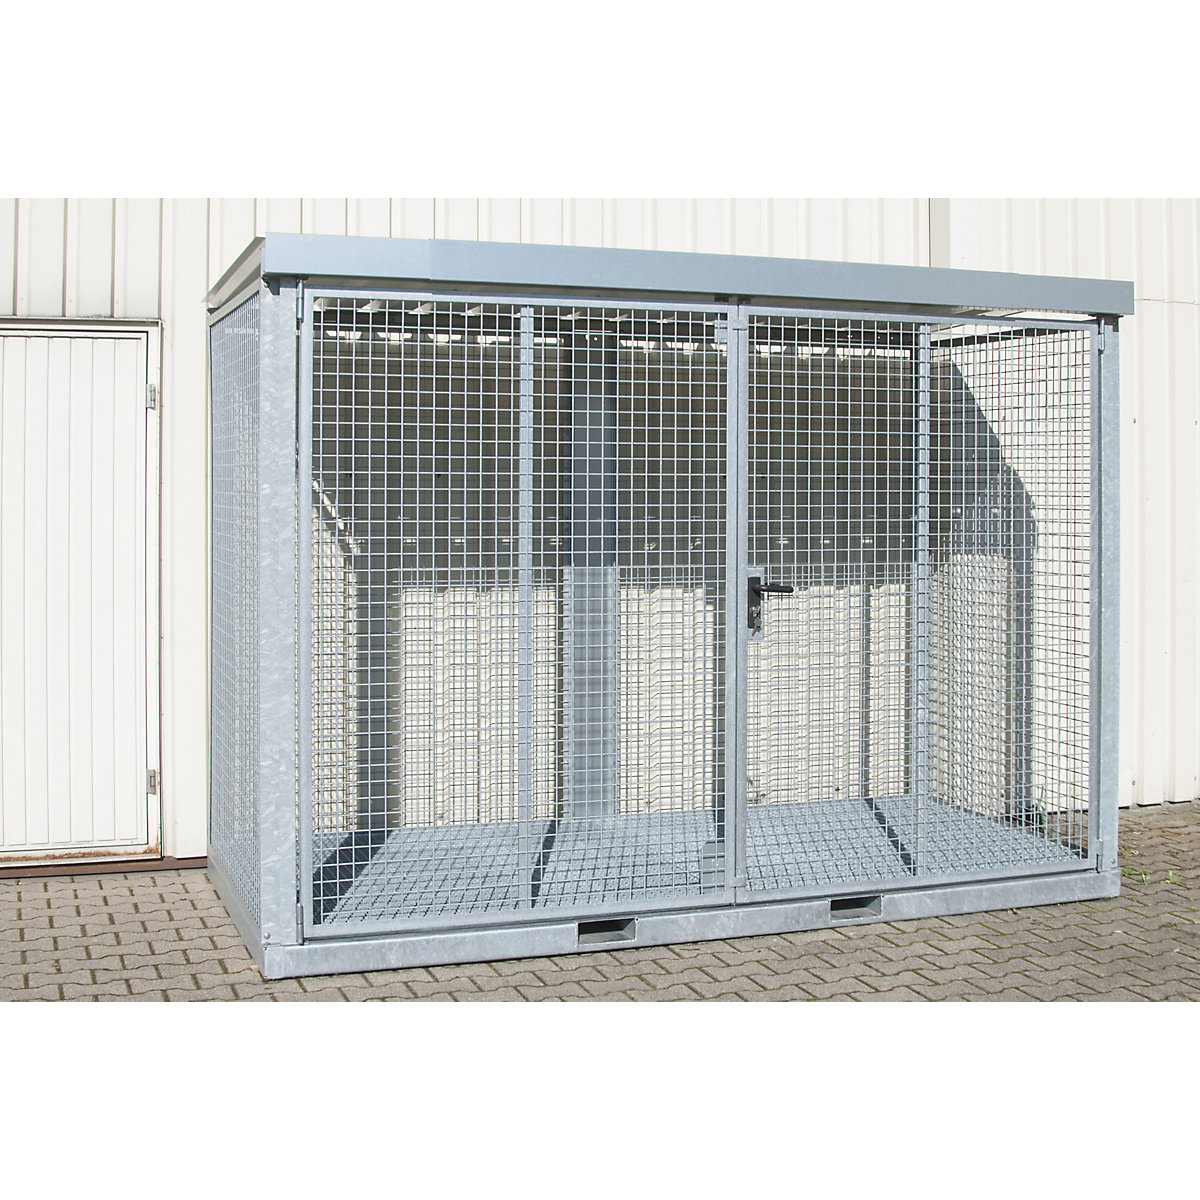 Assembled mesh gas cylinder cages – eurokraft pro